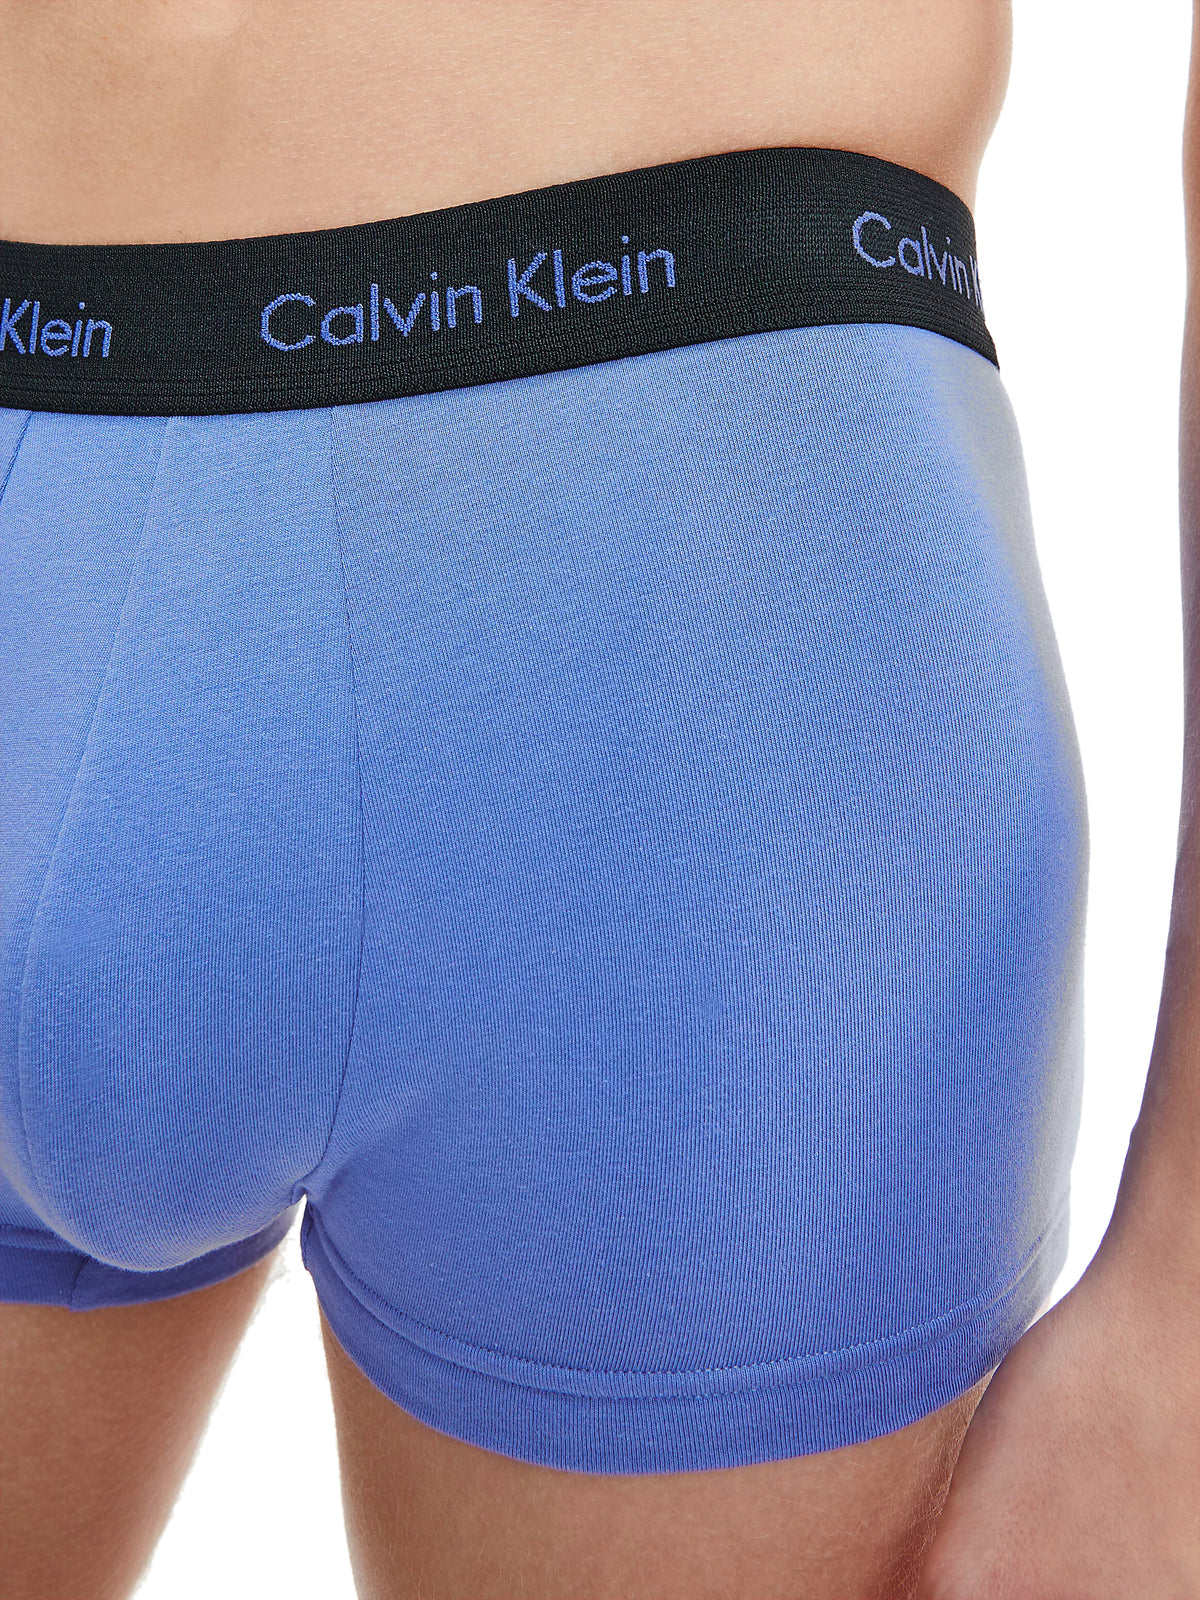 Mens Calvin Klein Boxer Shorts Low Rise Trunks 3 Pack, 04, U2664G, Zero Below/Subdued/Dark Lavendar